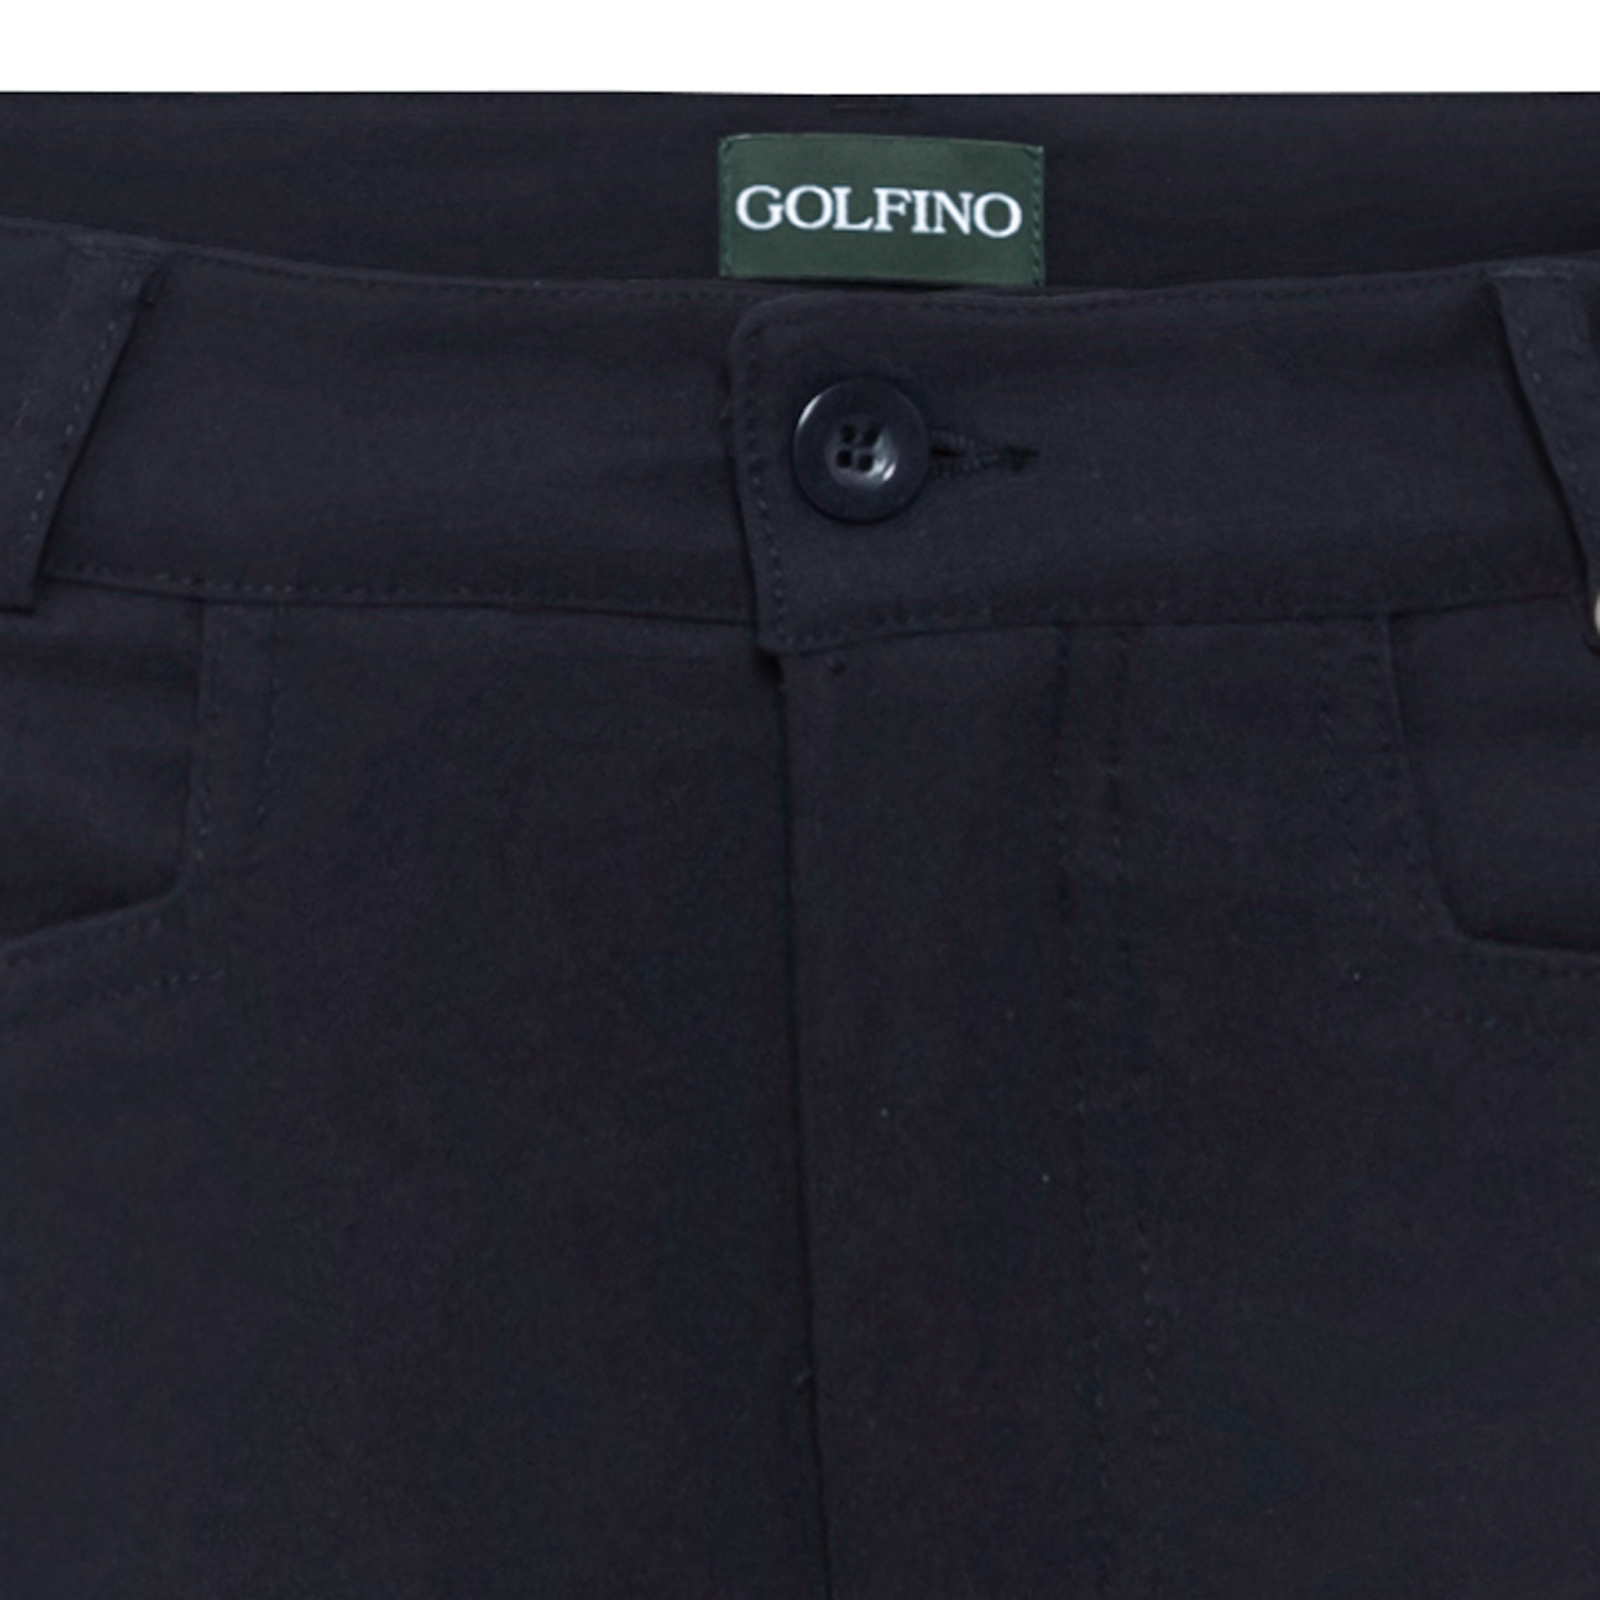 7/8 Techno Stretch Damen Golf Hose mit UV Protection